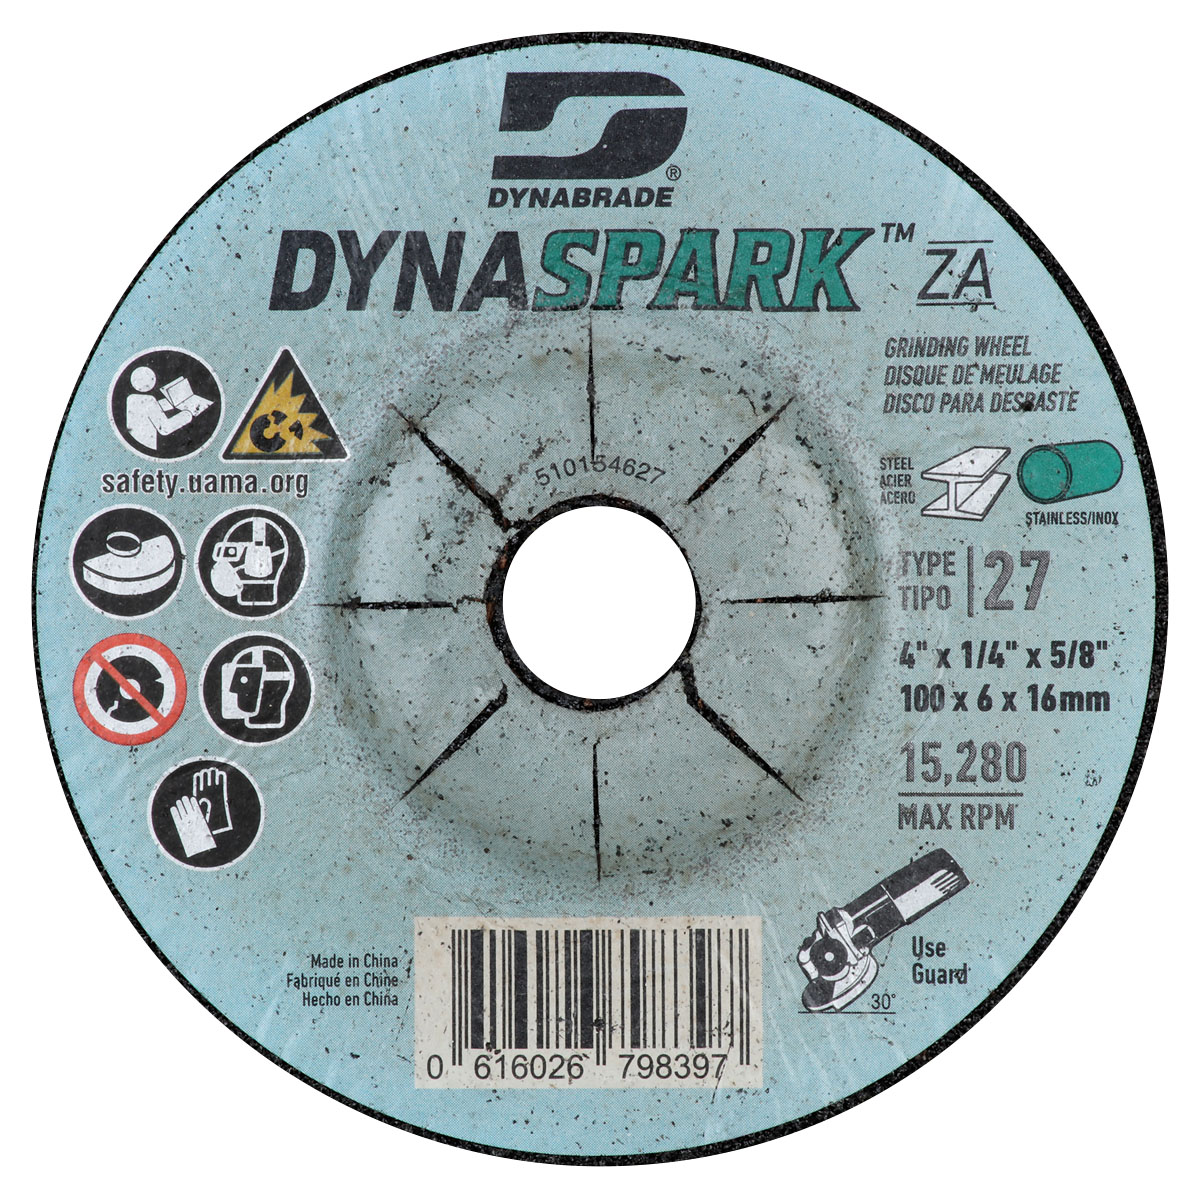 DynaSpark ZA SS 4" x 1/4" x 5/8" T27 Grinding Wheel